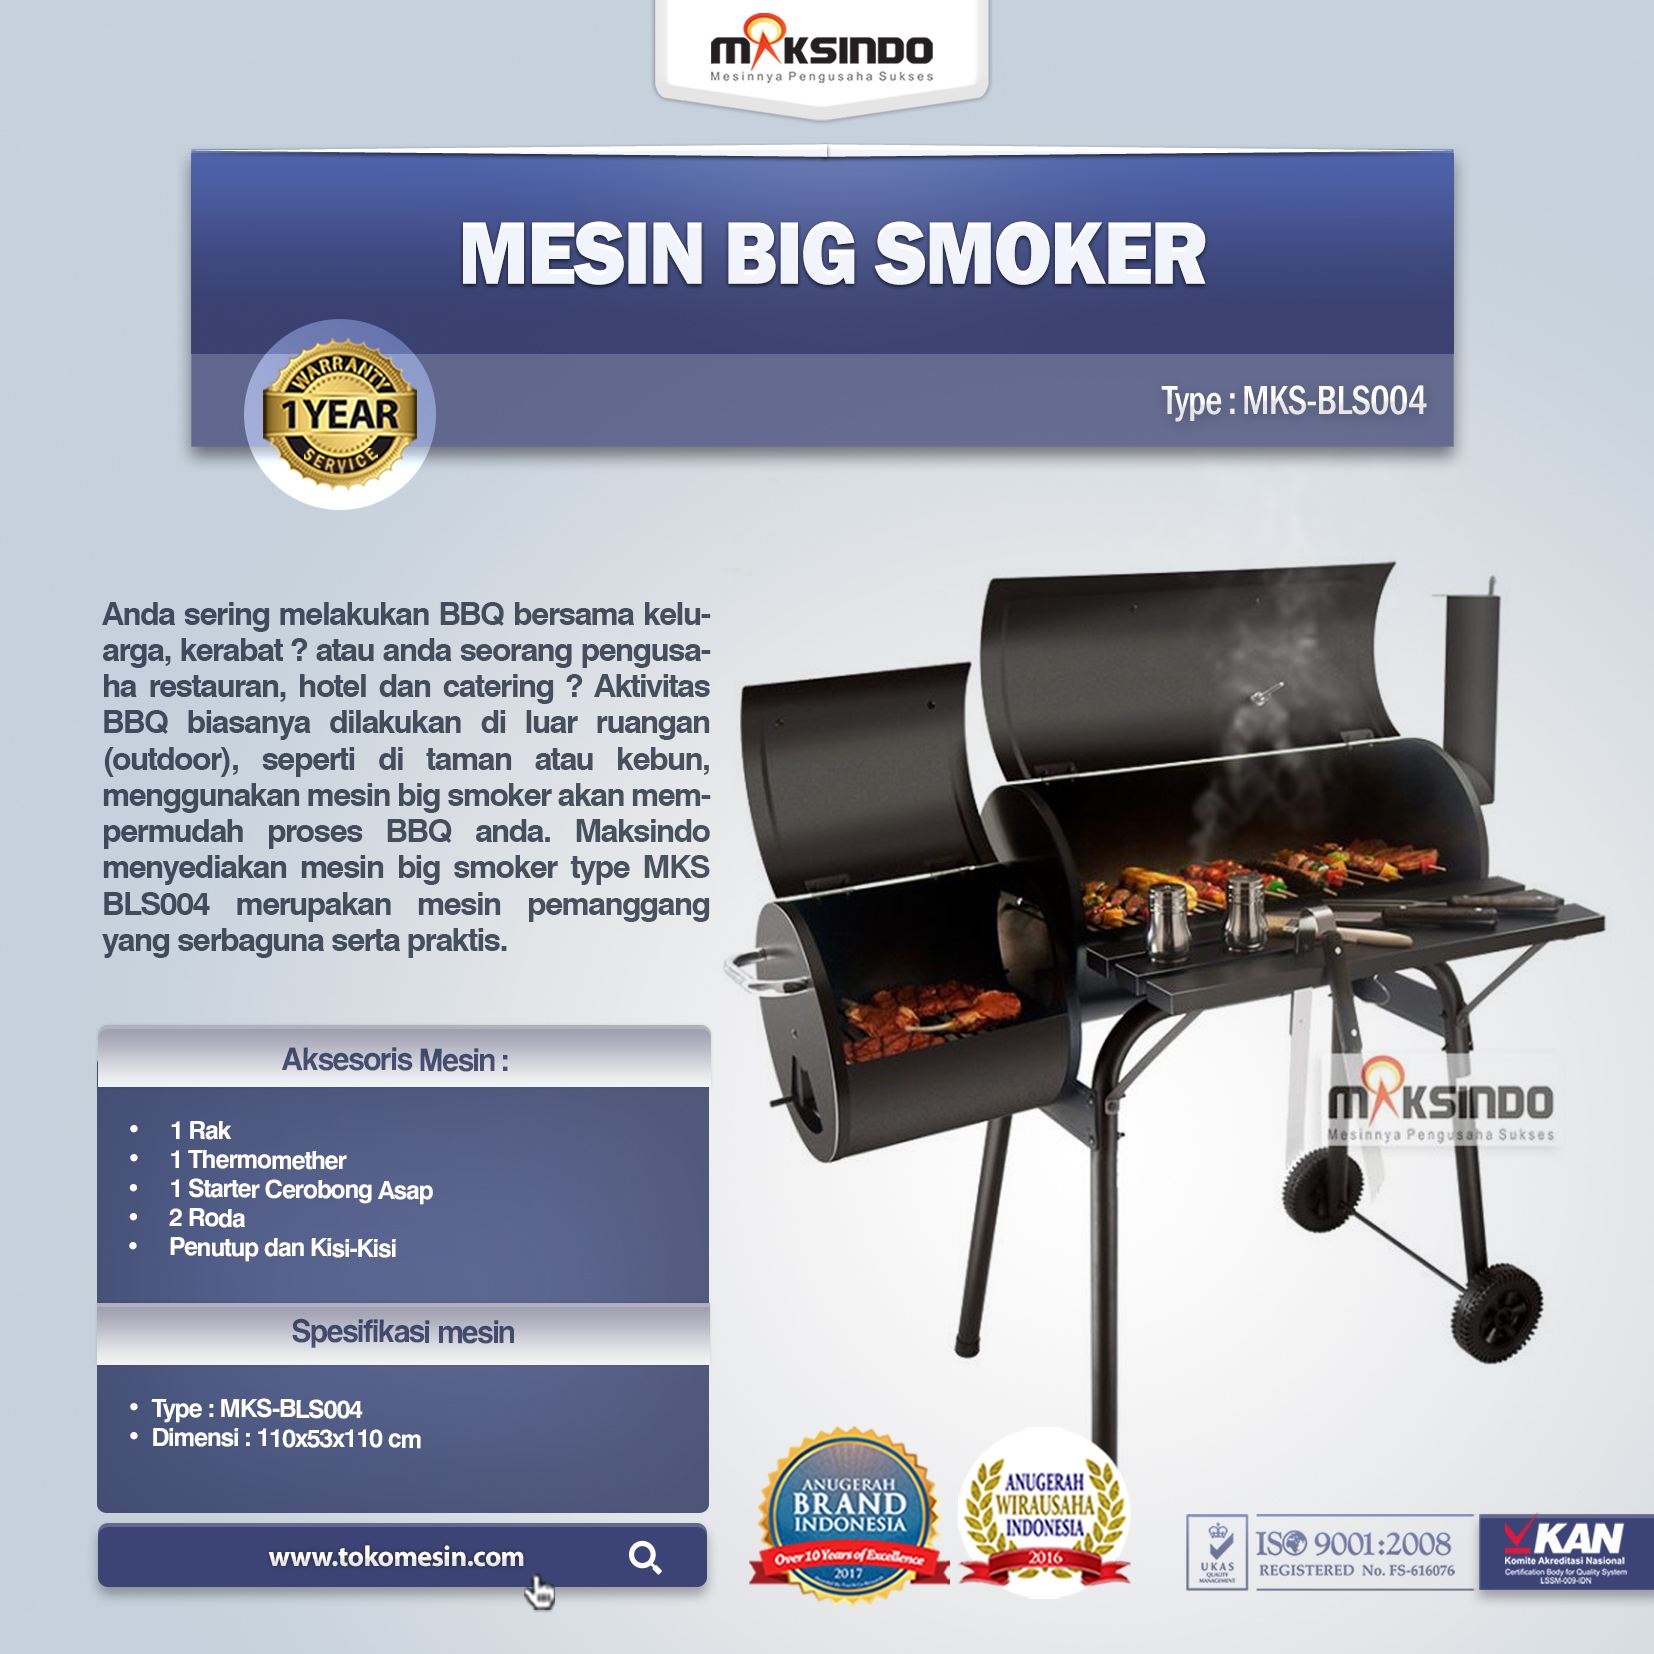 Mesin Big Smoker MKS-BLS004